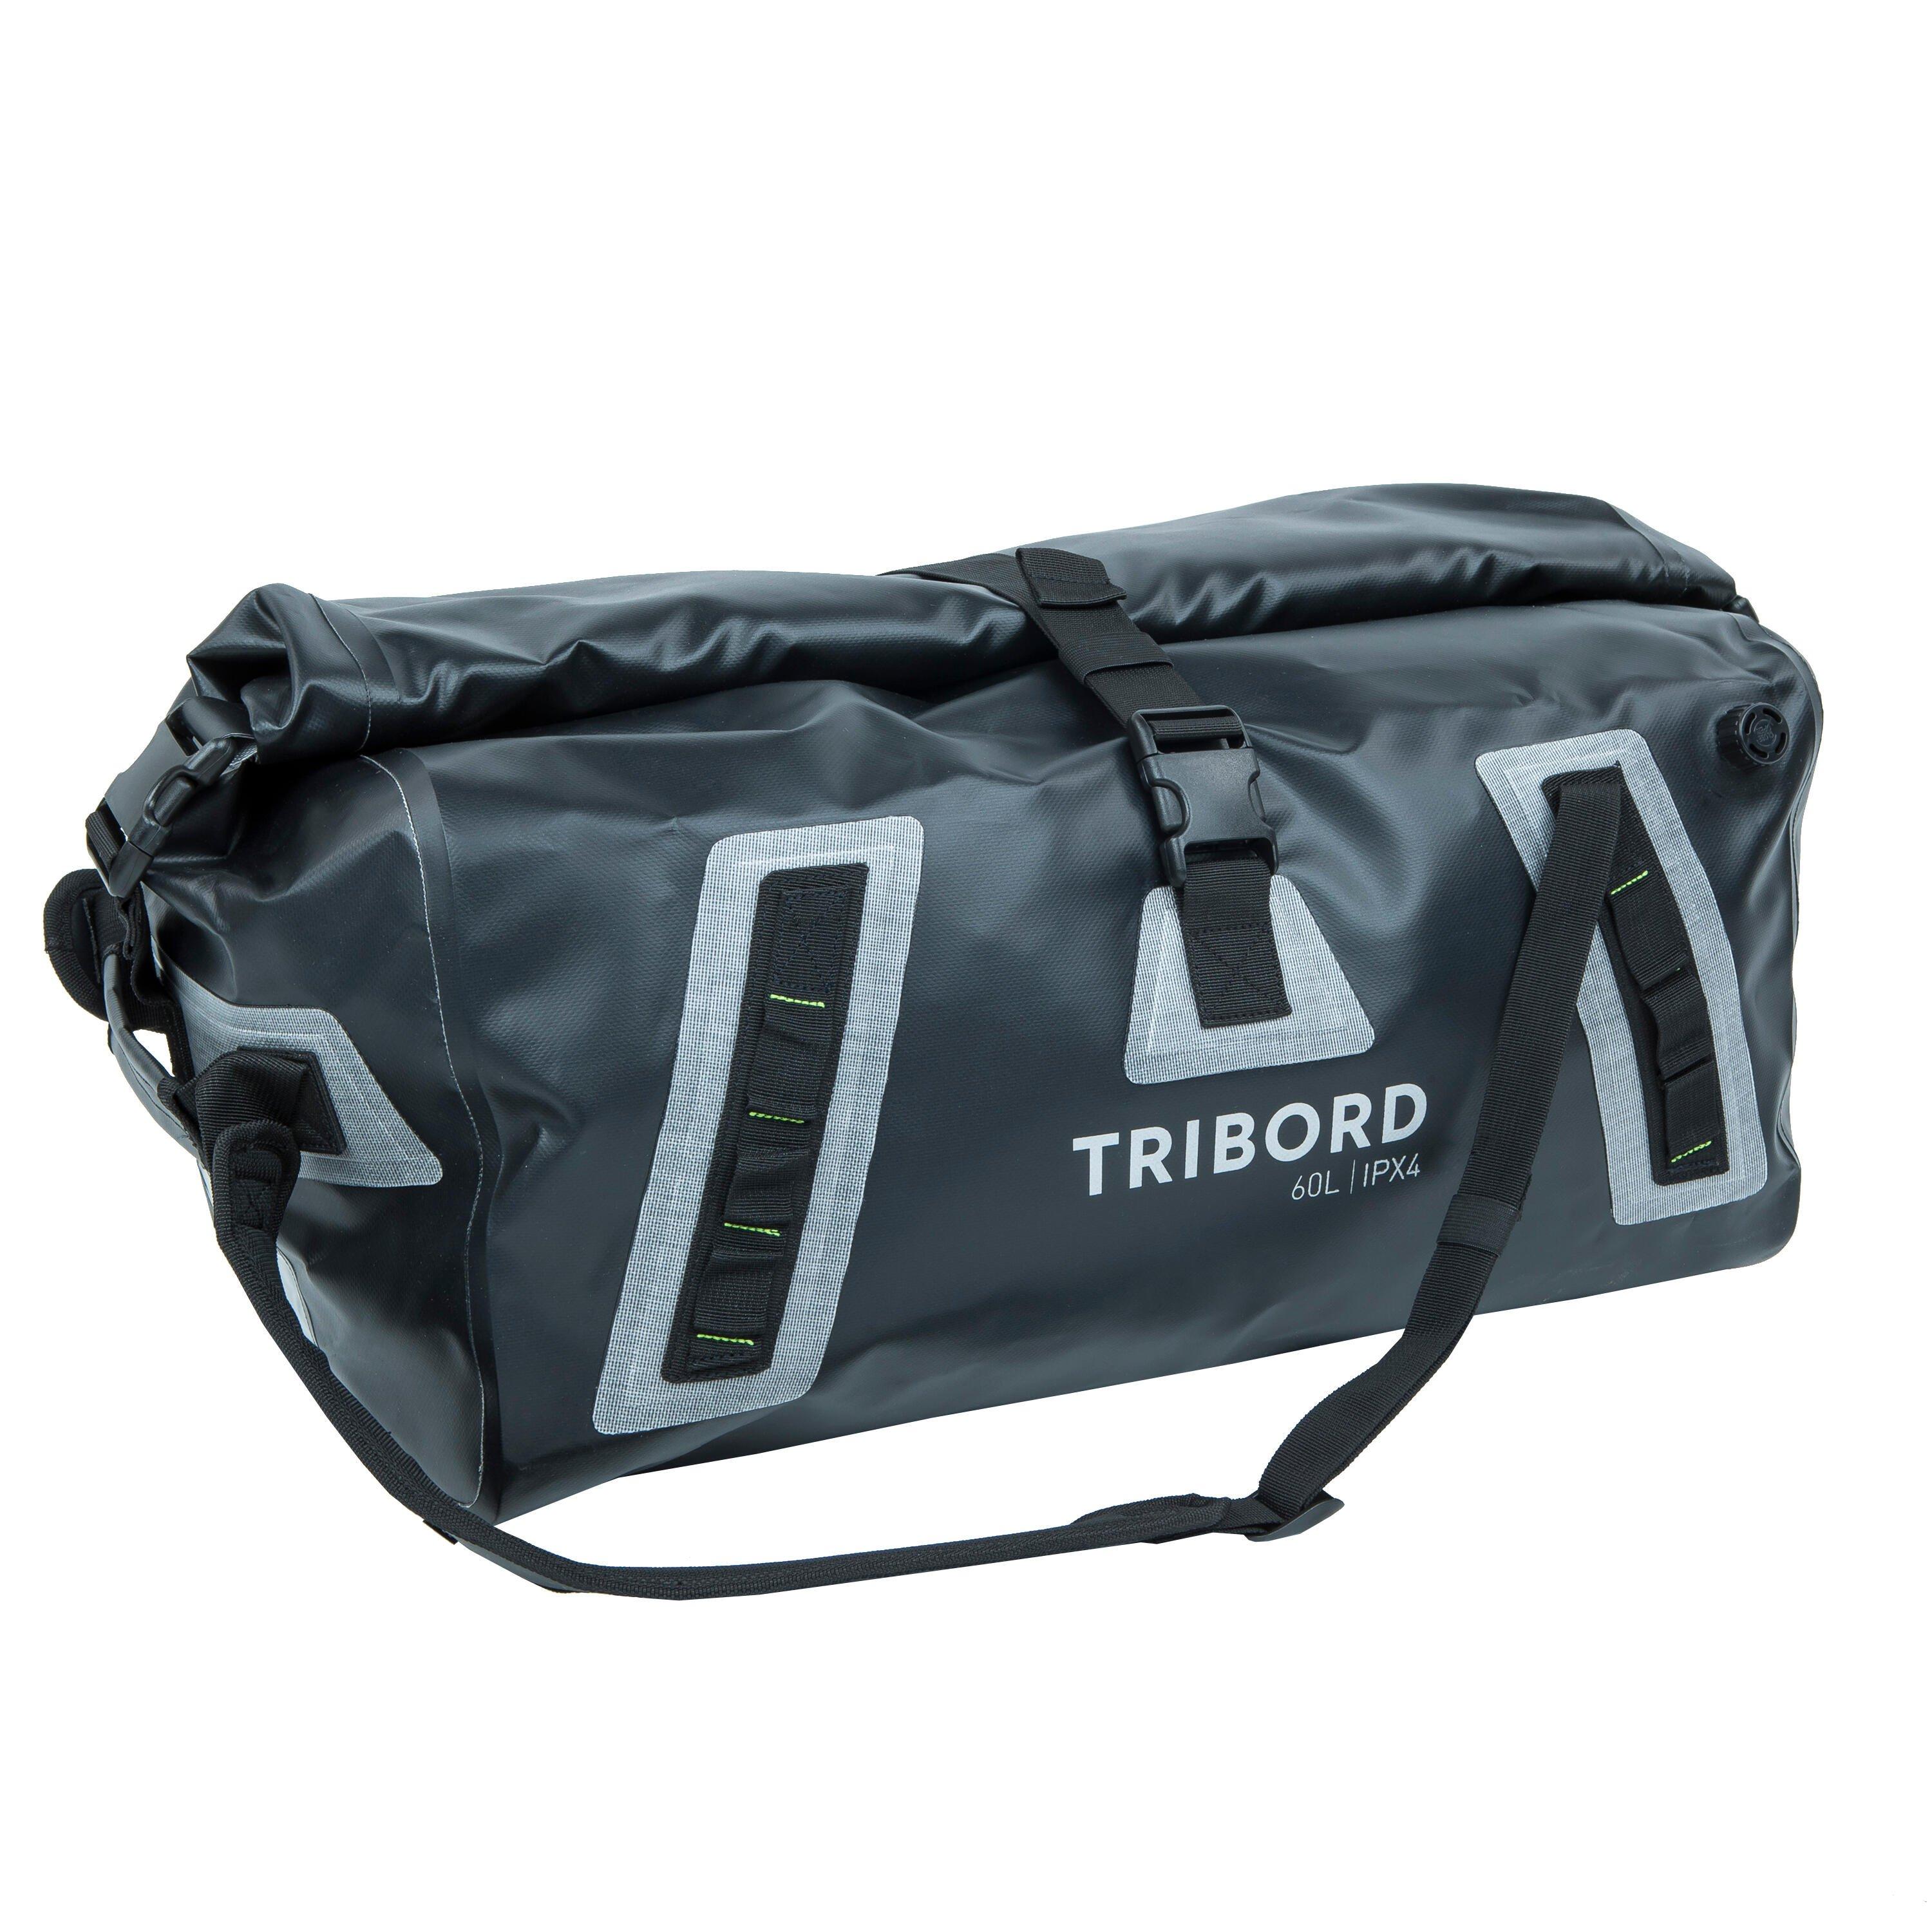 Decathlon Waterproof Duffle Bag - Travel Bag 60 L